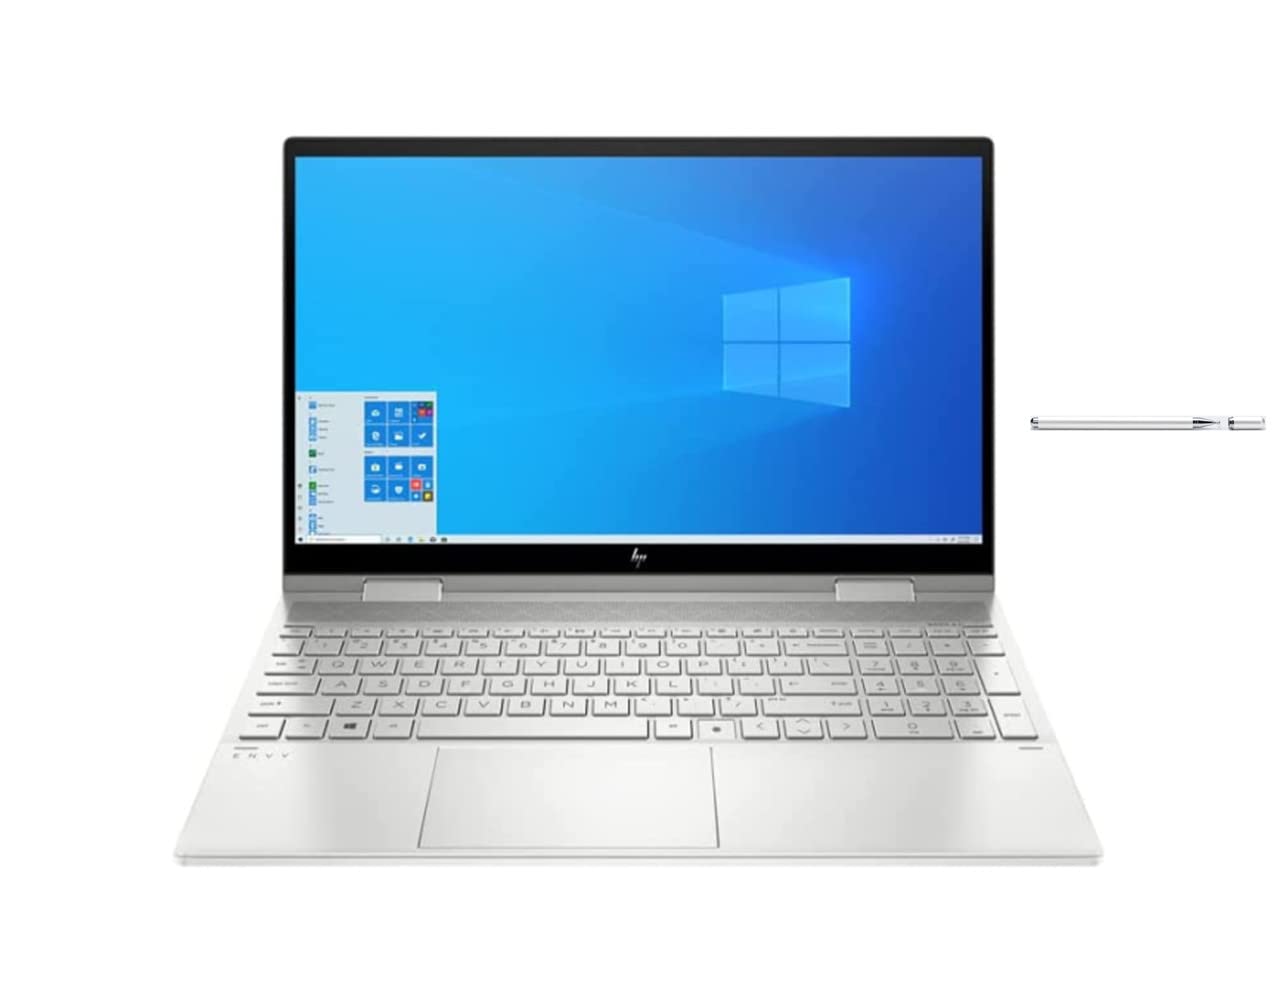 HP Envy X360 2-in-1 15.6" FHD IPS Touch-Screen Laptop | 11th Generation Intel Core i5-1135G7 | 32GB DDR4 RAM | 512GB SSD | Backlit Keyboard | Fingerprint | Windows 11 | with Stylus Pen Bundle